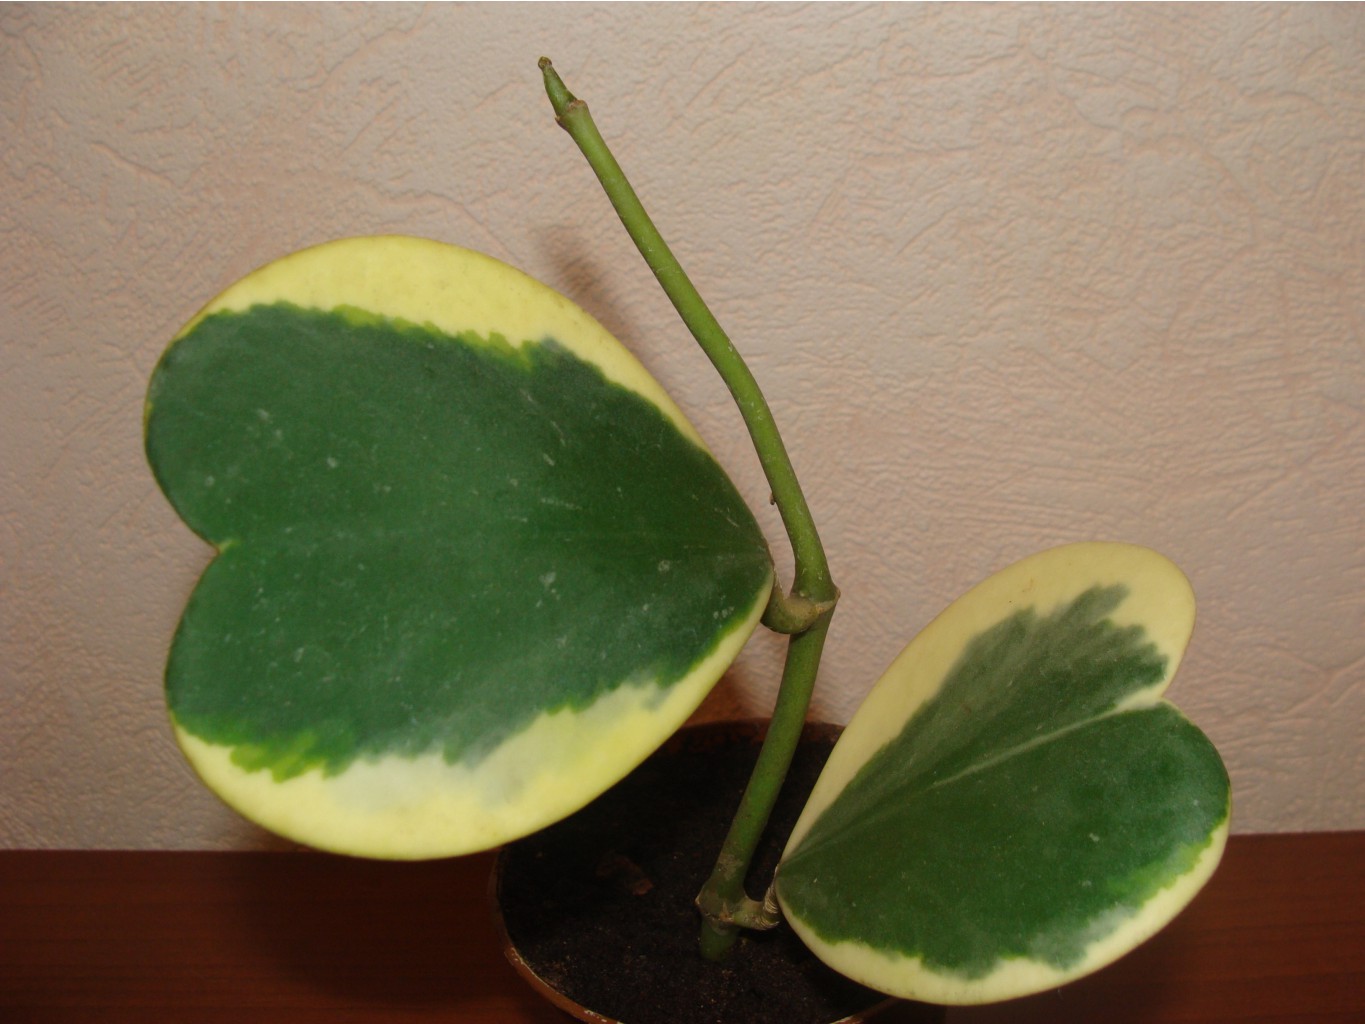 Hoya kerrii variegata  